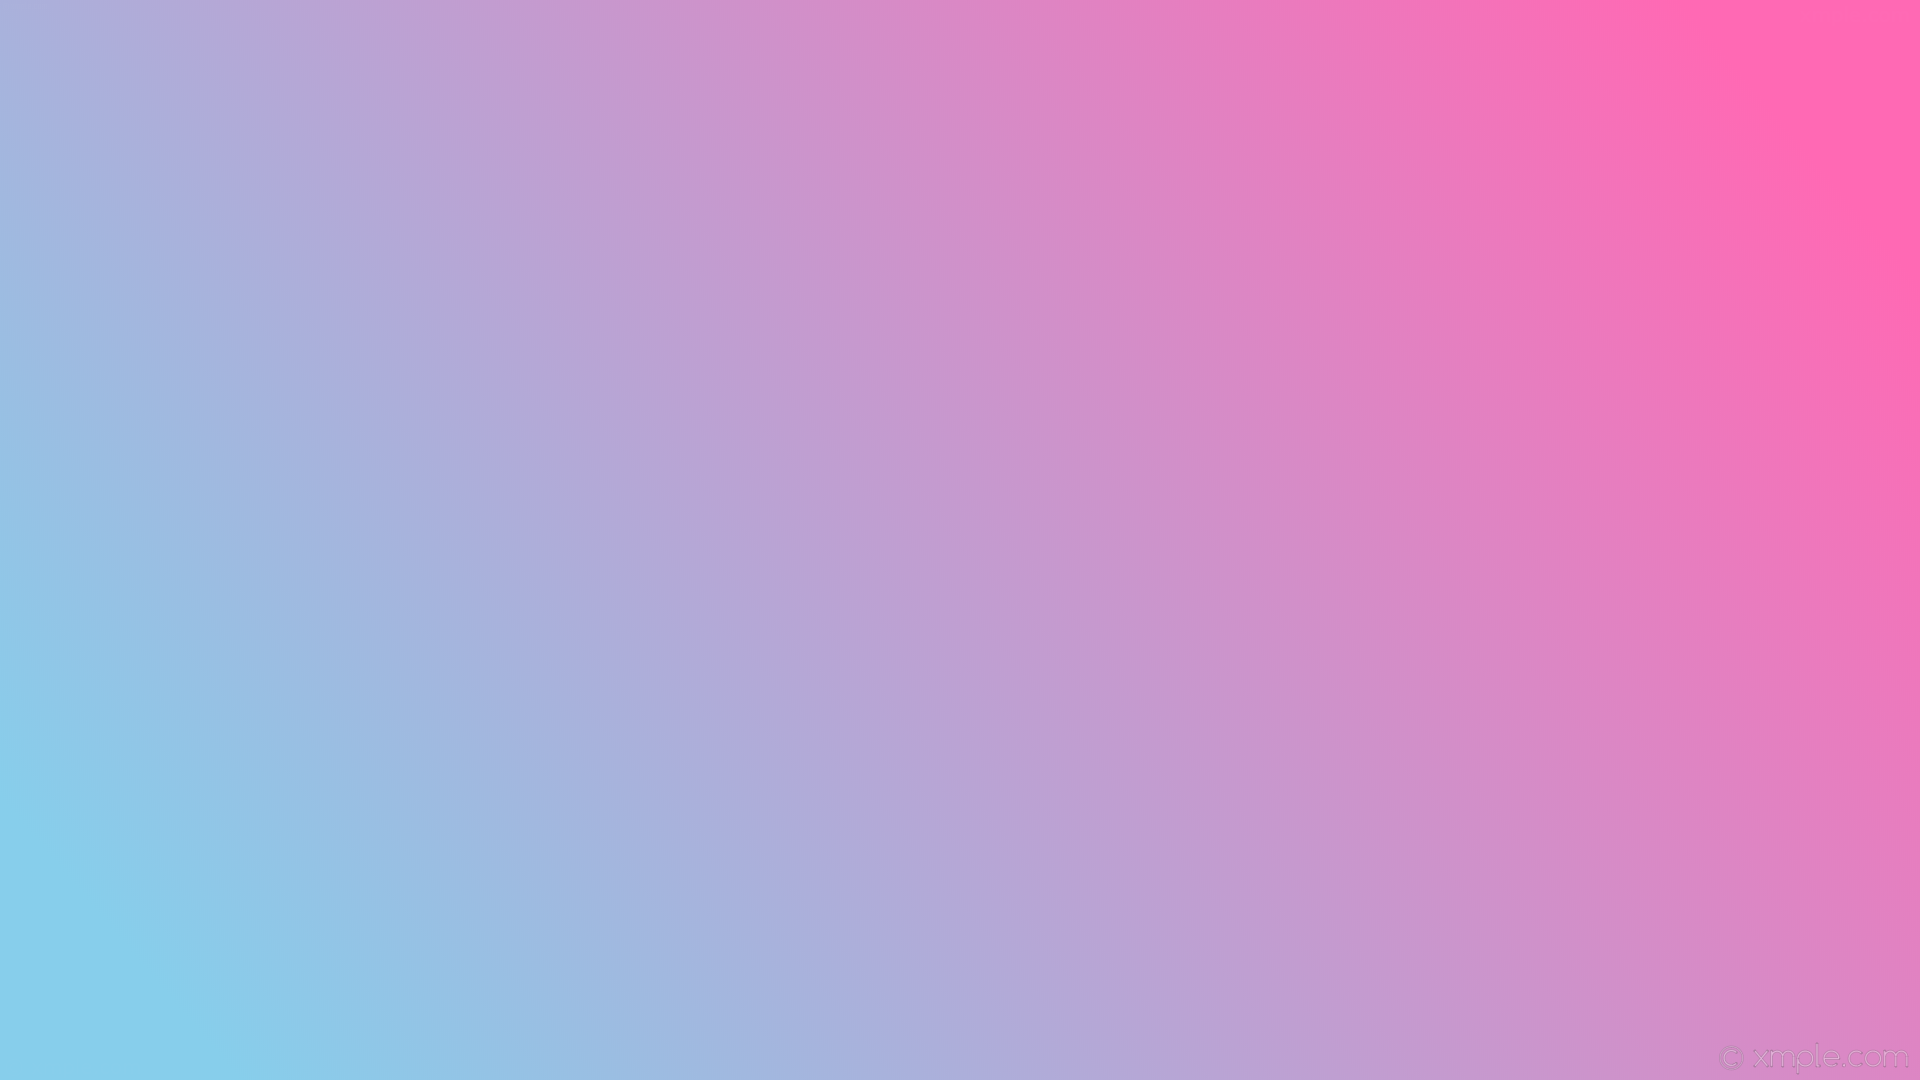 1. Pink and Blue Gradient Hair Dye Tutorial - wide 5